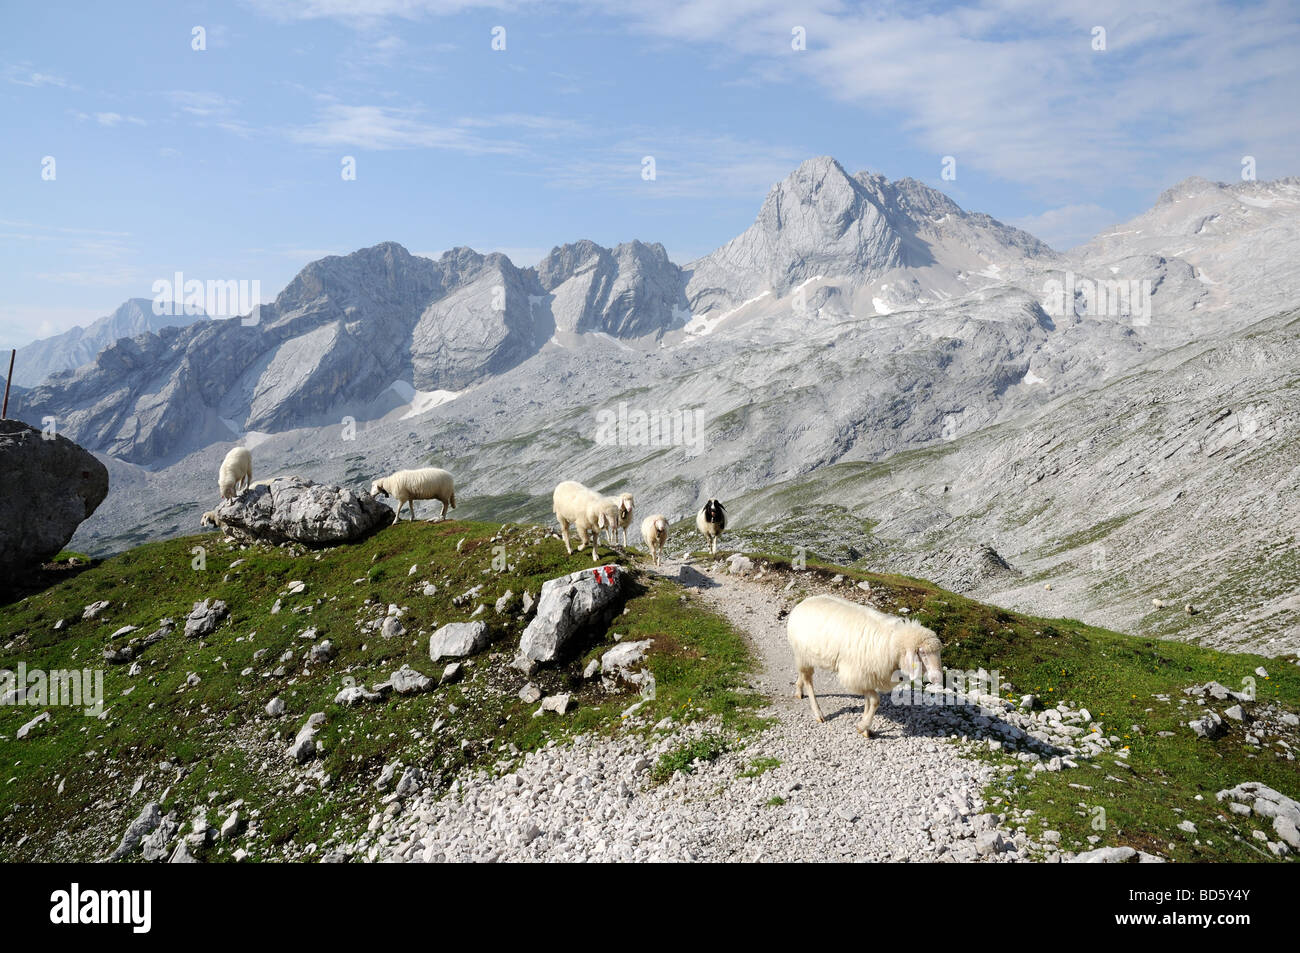 Alpine landscape with grazing sheep Stock Photo